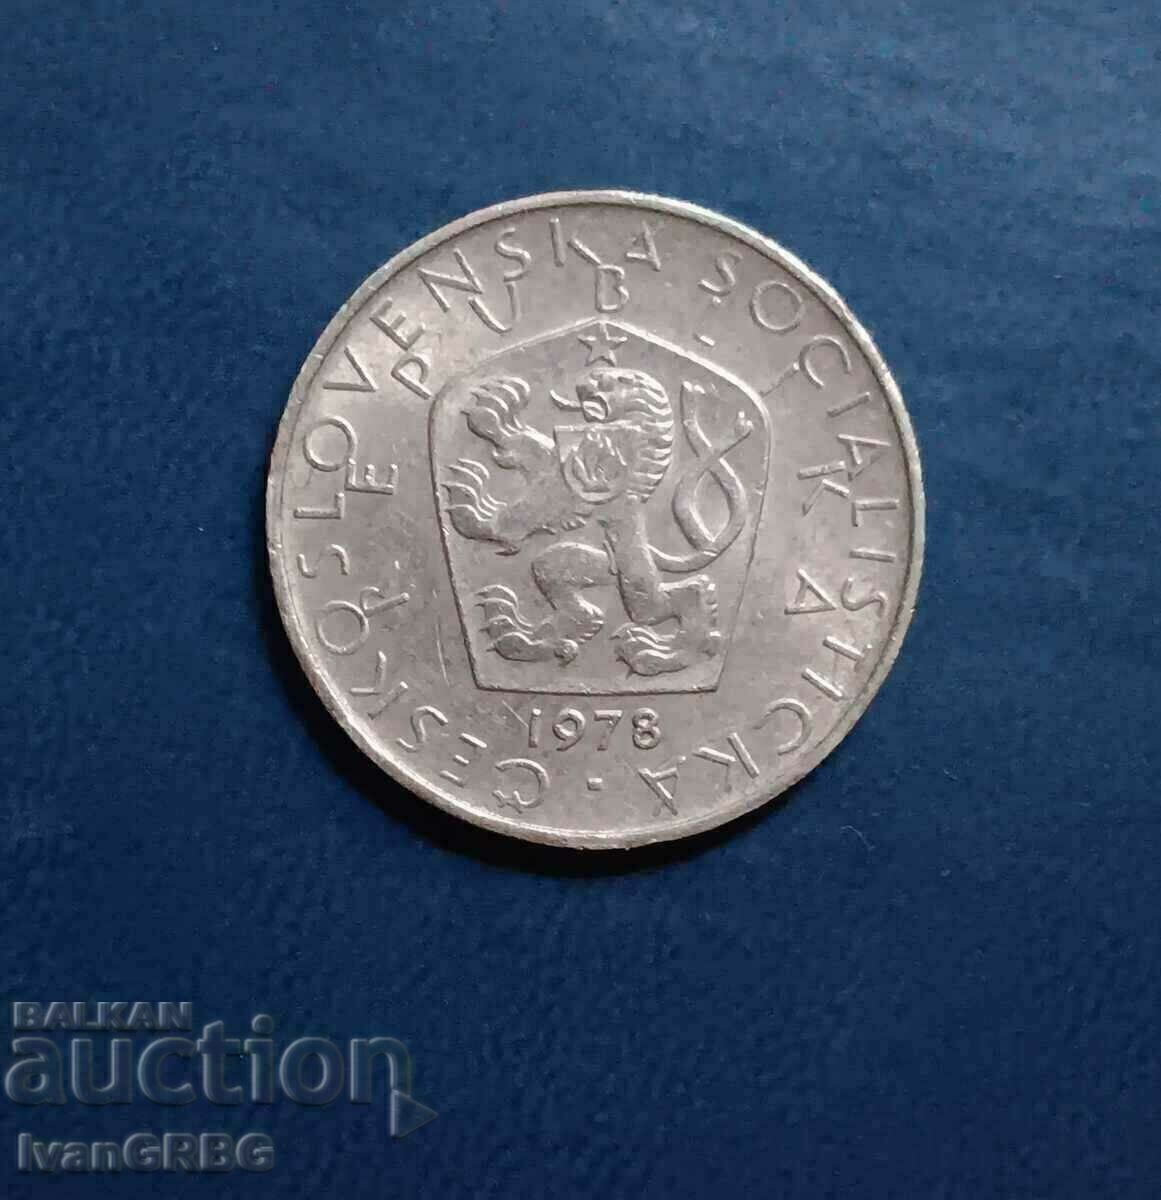 5 kroner Czechoslovakia 1978